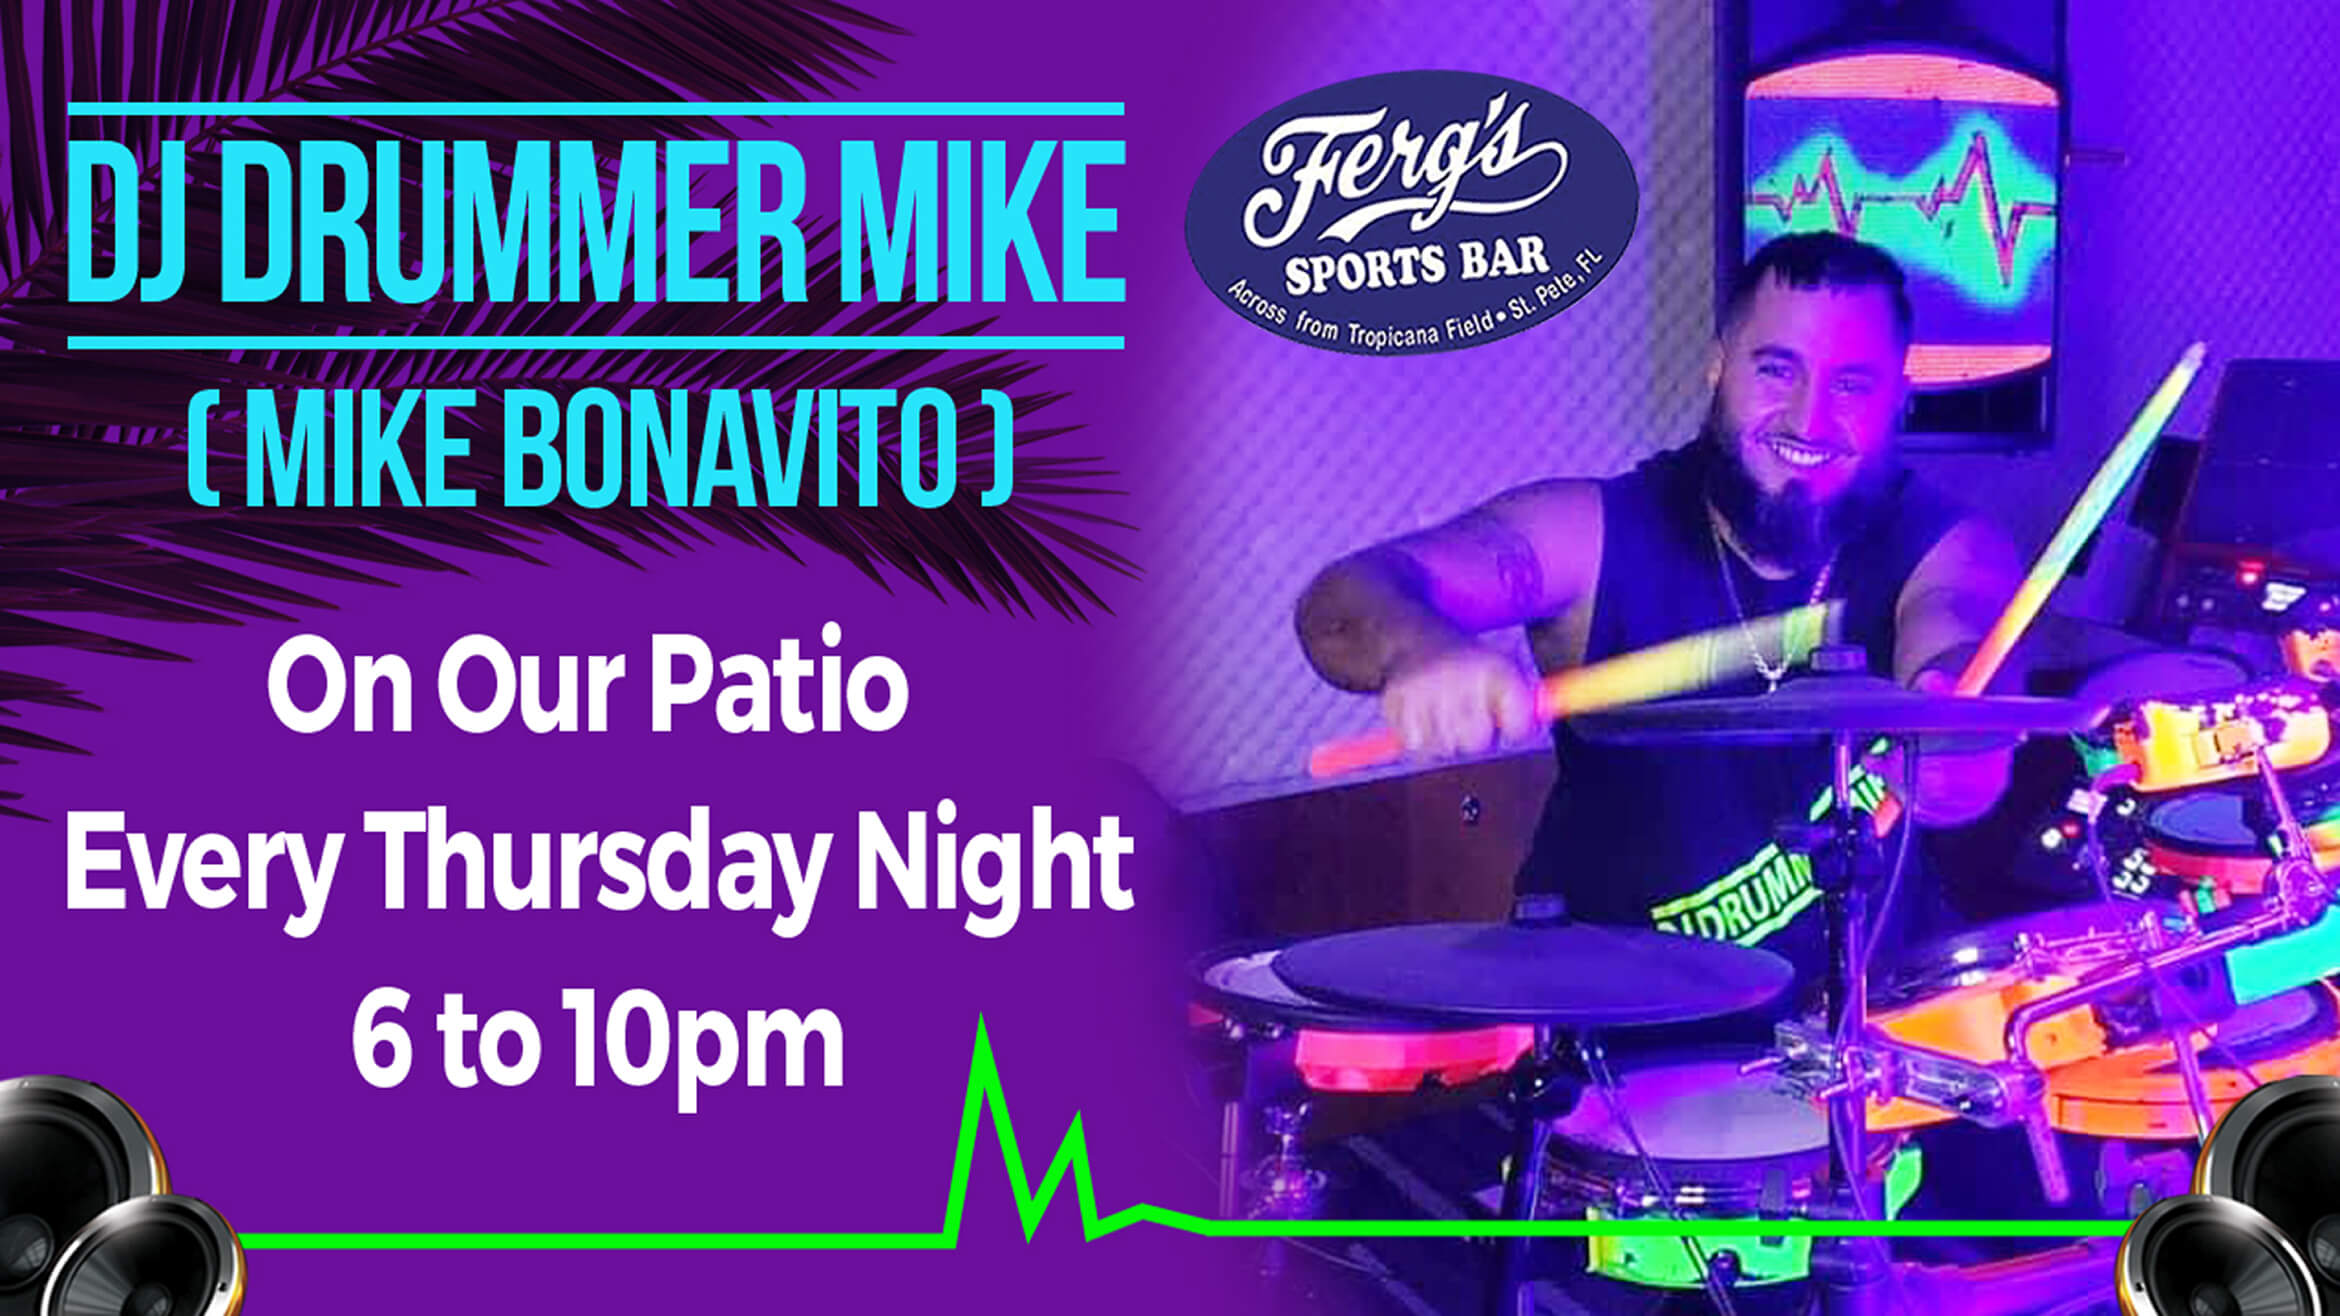 DJ Drummer Mike everything Thursday at Ferg's Sports Bar